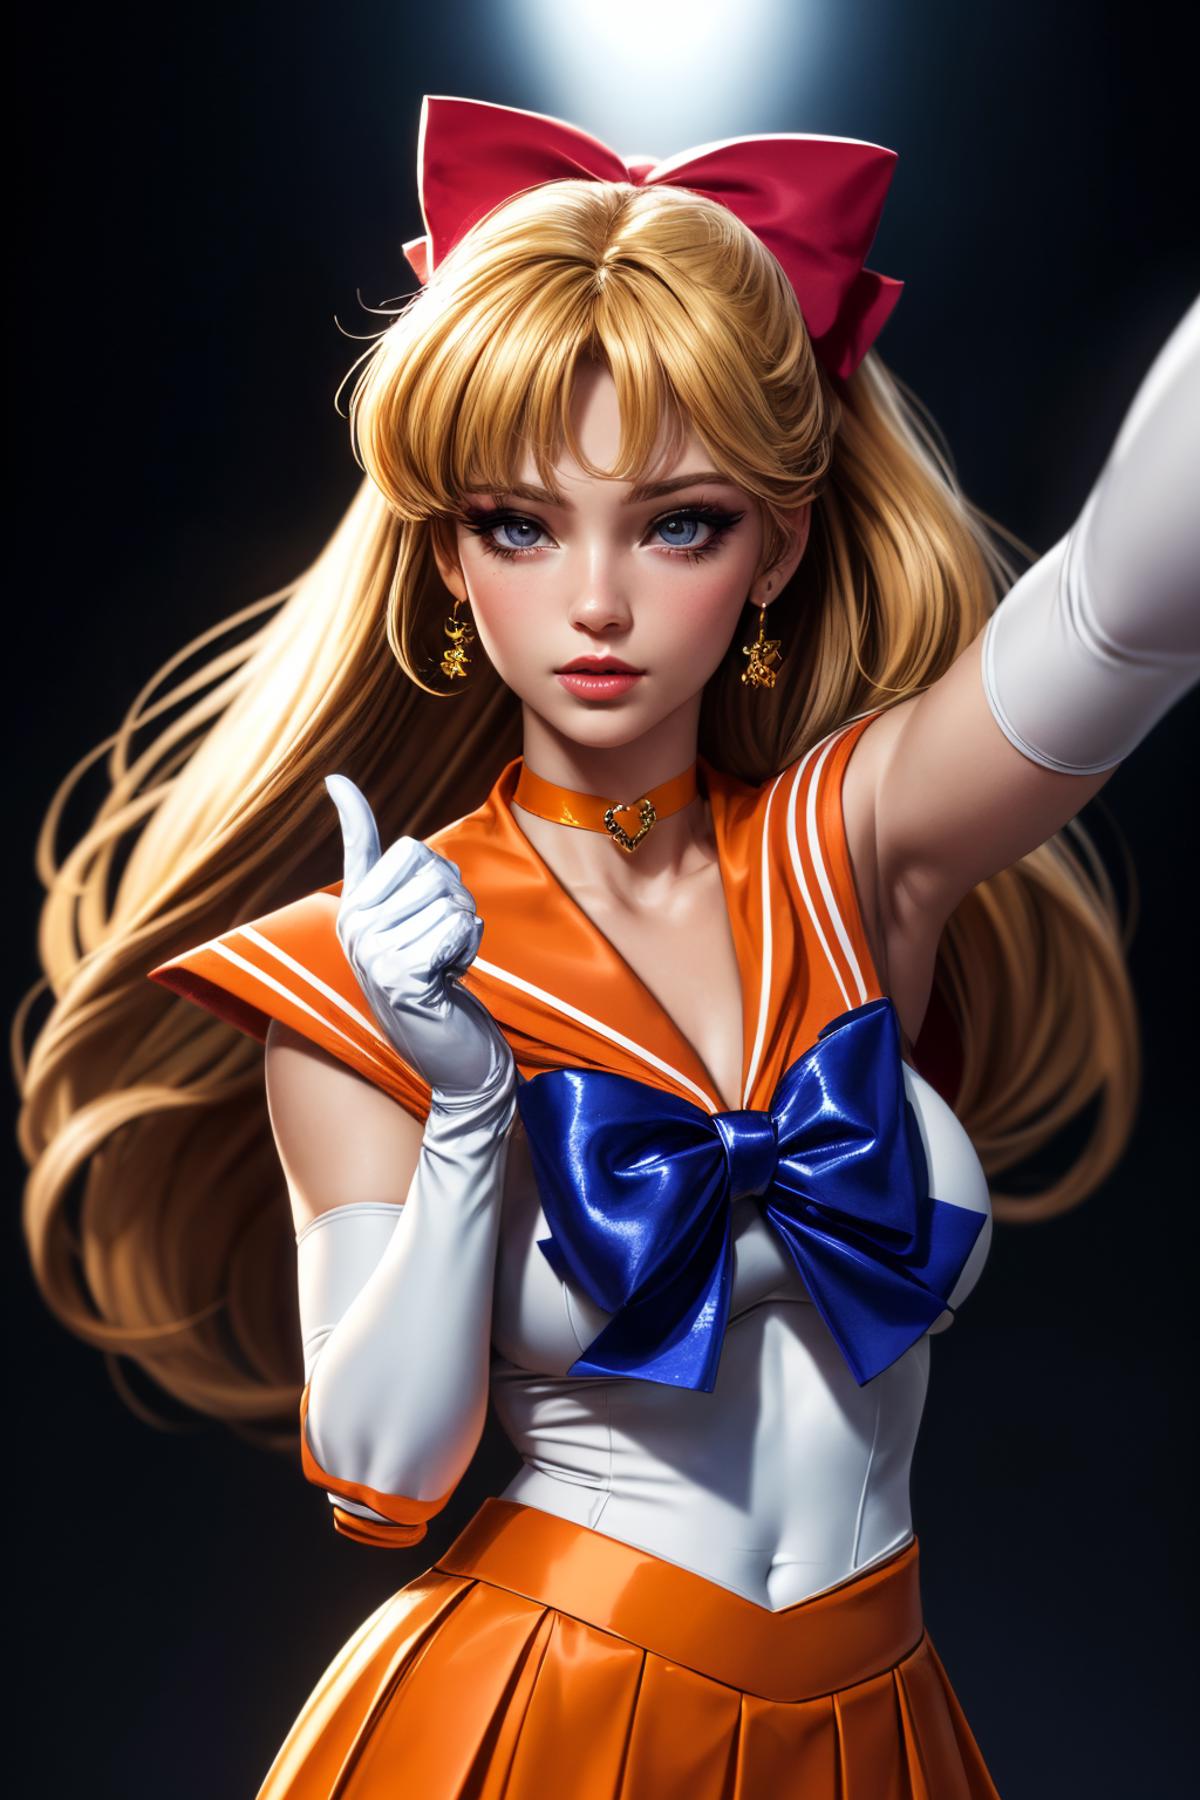 Minako Aino (愛野 美奈子) / Sailor Venus (セーラーヴィーナス) - Sailor Moon (美少女戦士セーラームーン) image by iJWiTGS8